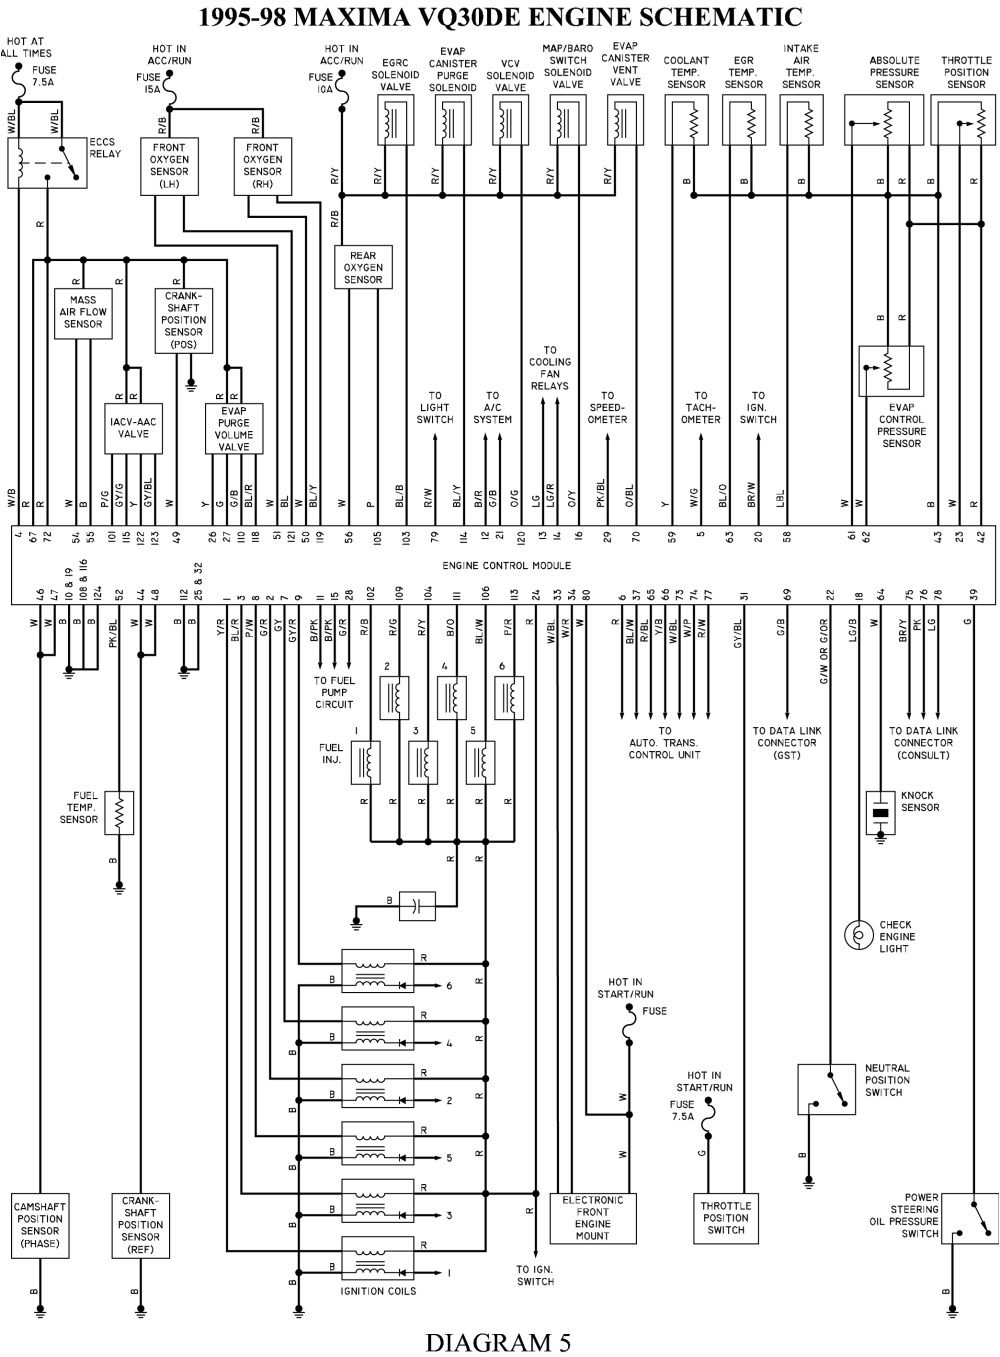 2001 nissan maxima engine diagram 1996 nissan maxima wiring diagram webtor jpg